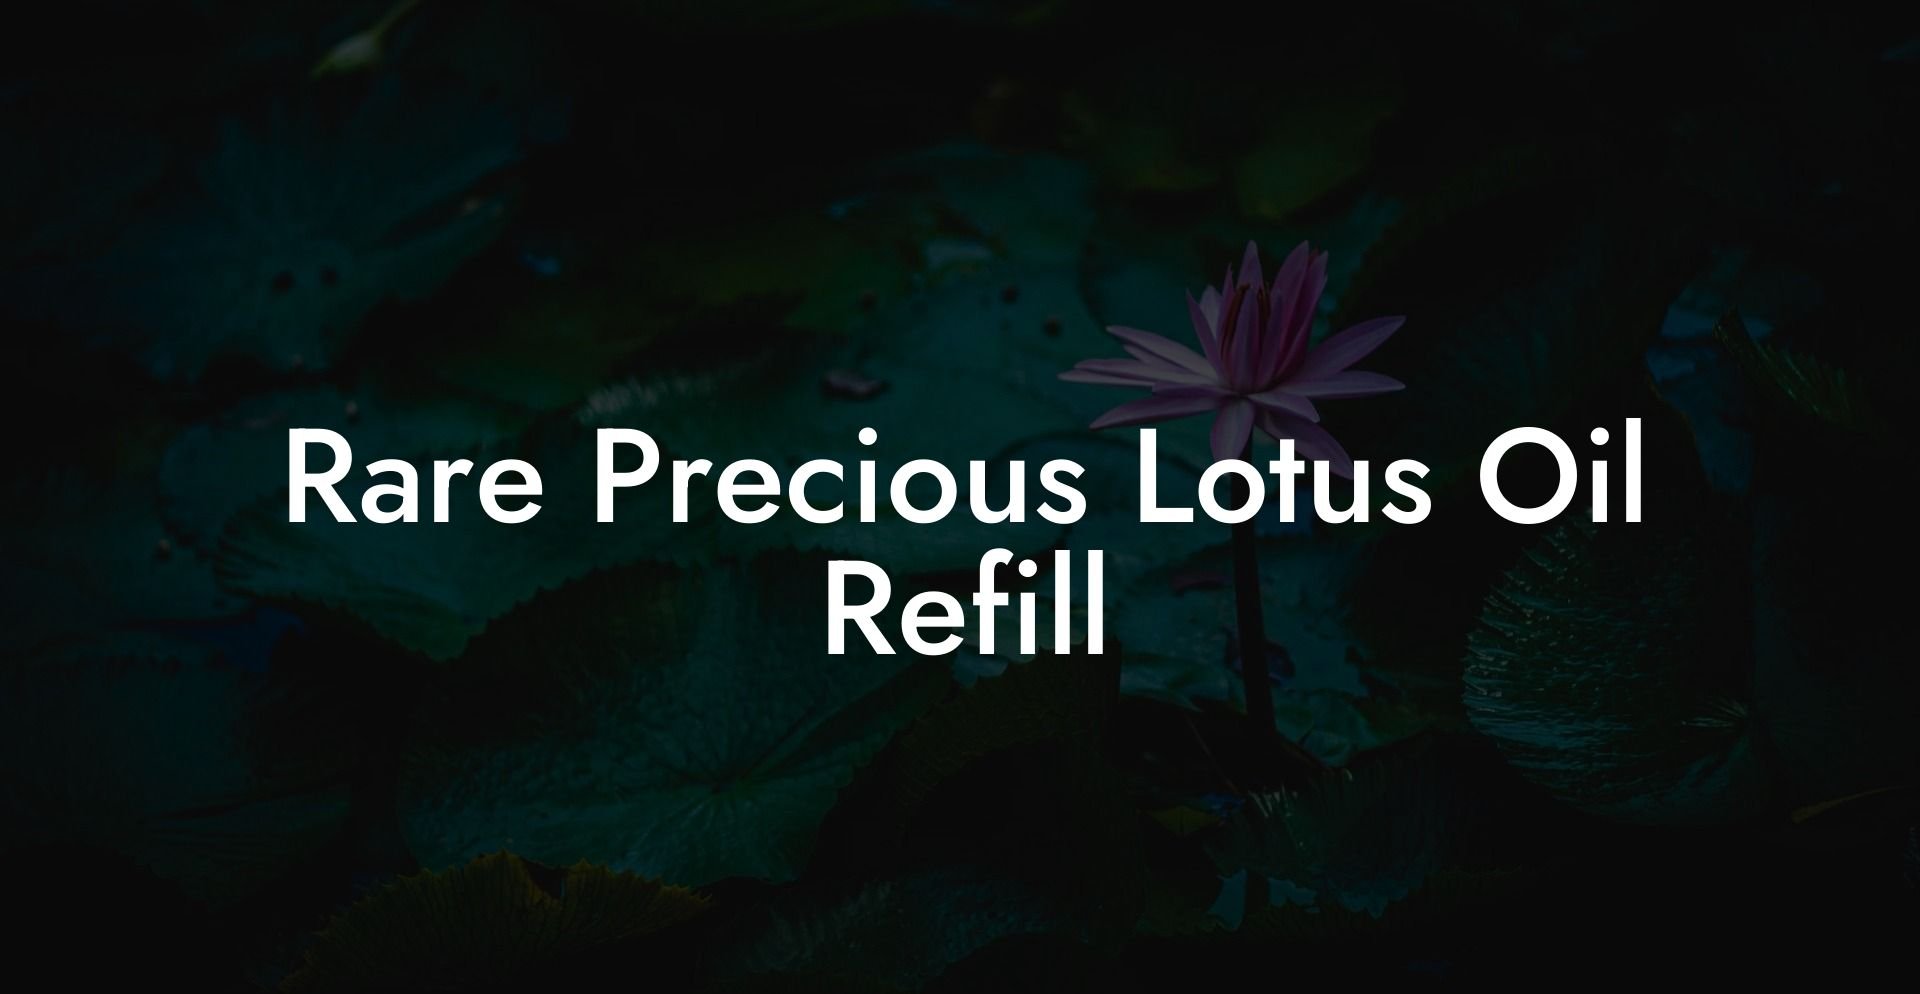 Rare Precious Lotus Oil Refill